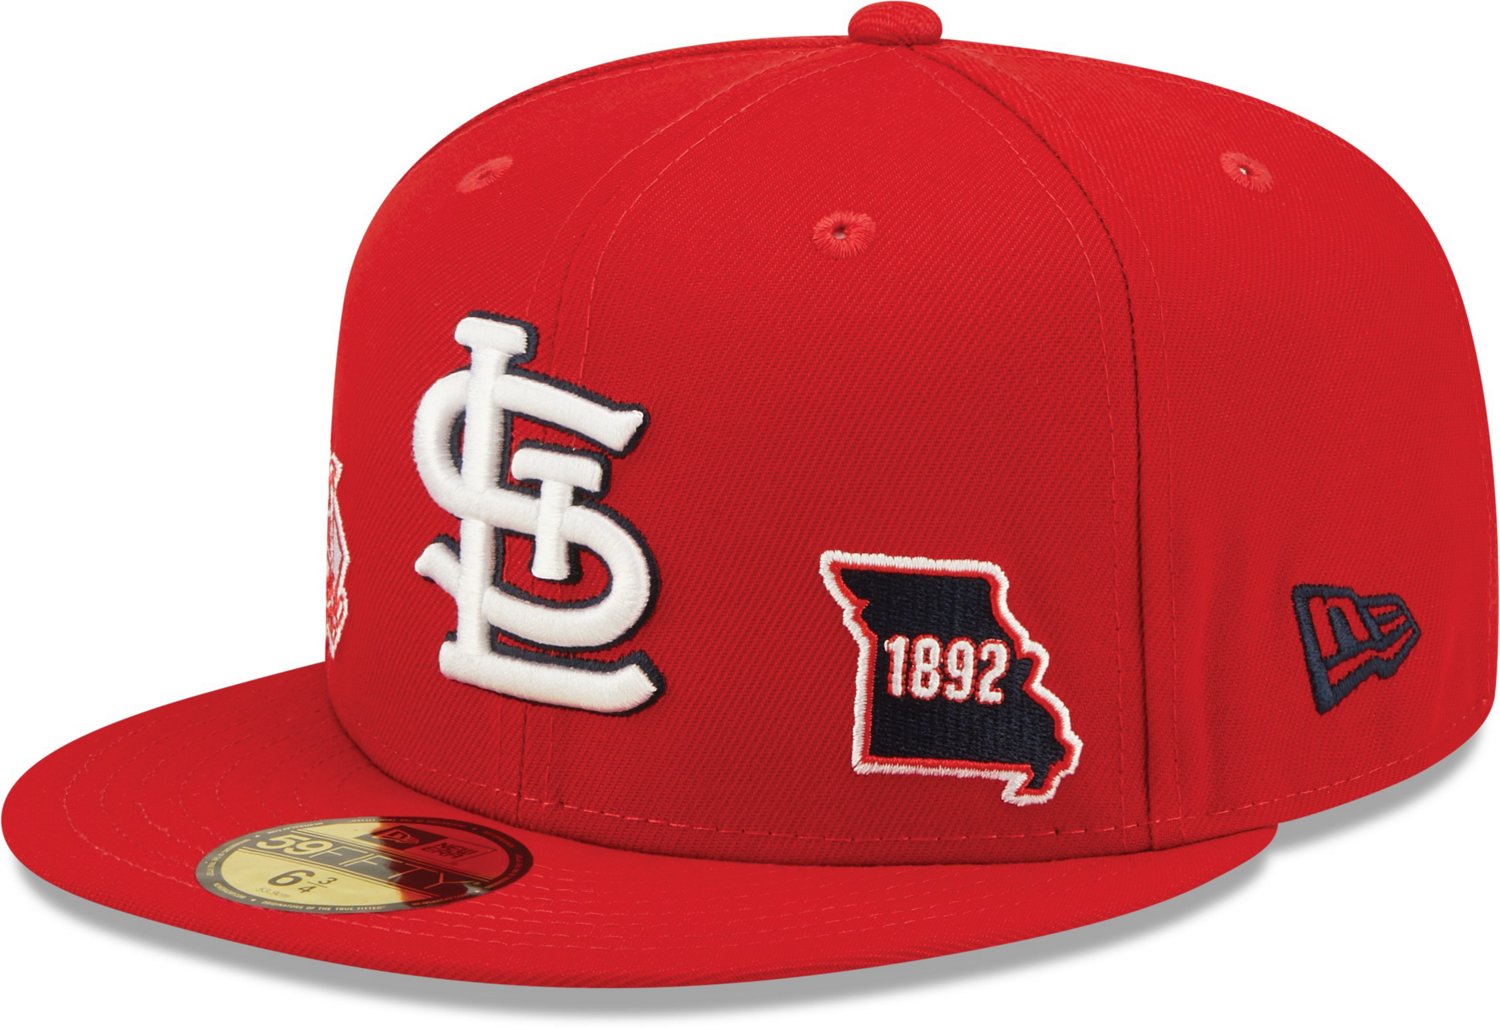 Mens St. Louis Cardinals Hats, Mens Cardinals Baseball Hats and Caps